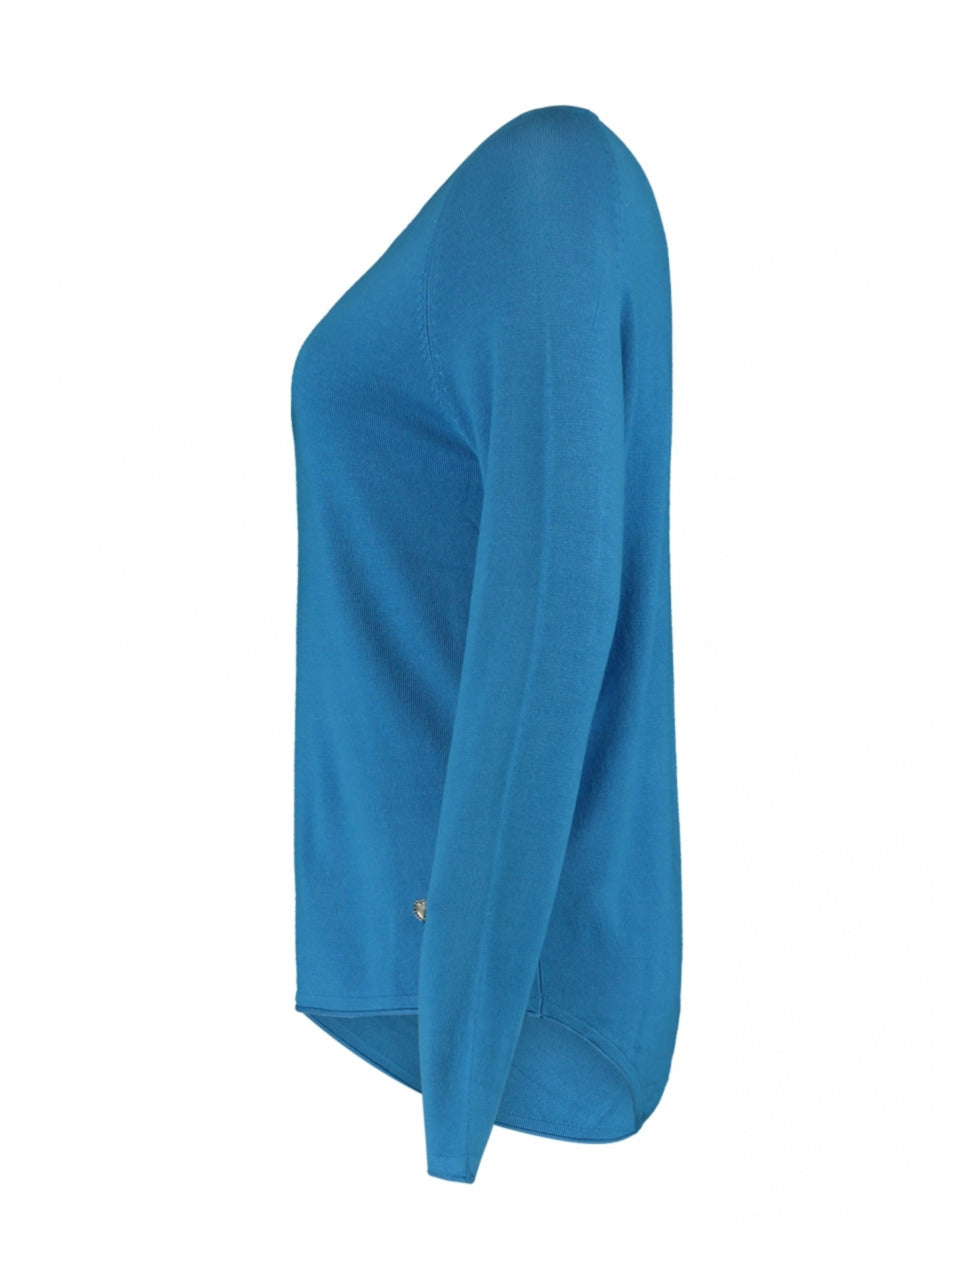 Marin Ocean Blue Knit Top